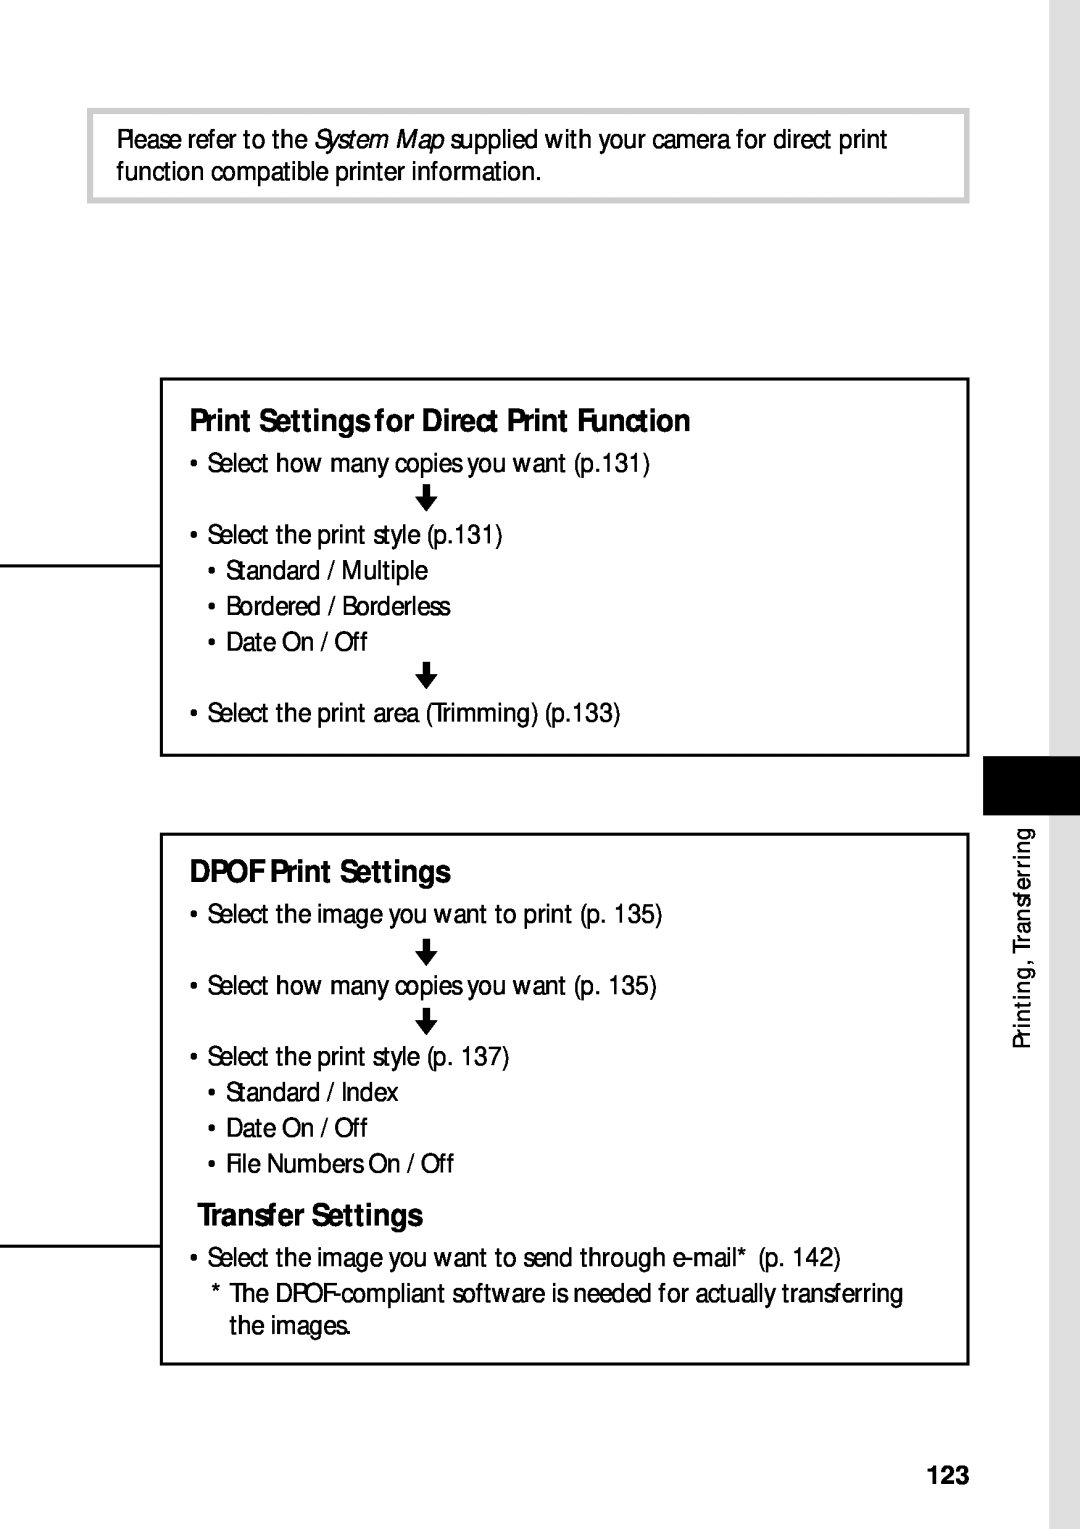 Canon PowerShot S45 manual Print Settings for Direct Print Function, DPOF Print Settings, Transfer Settings 